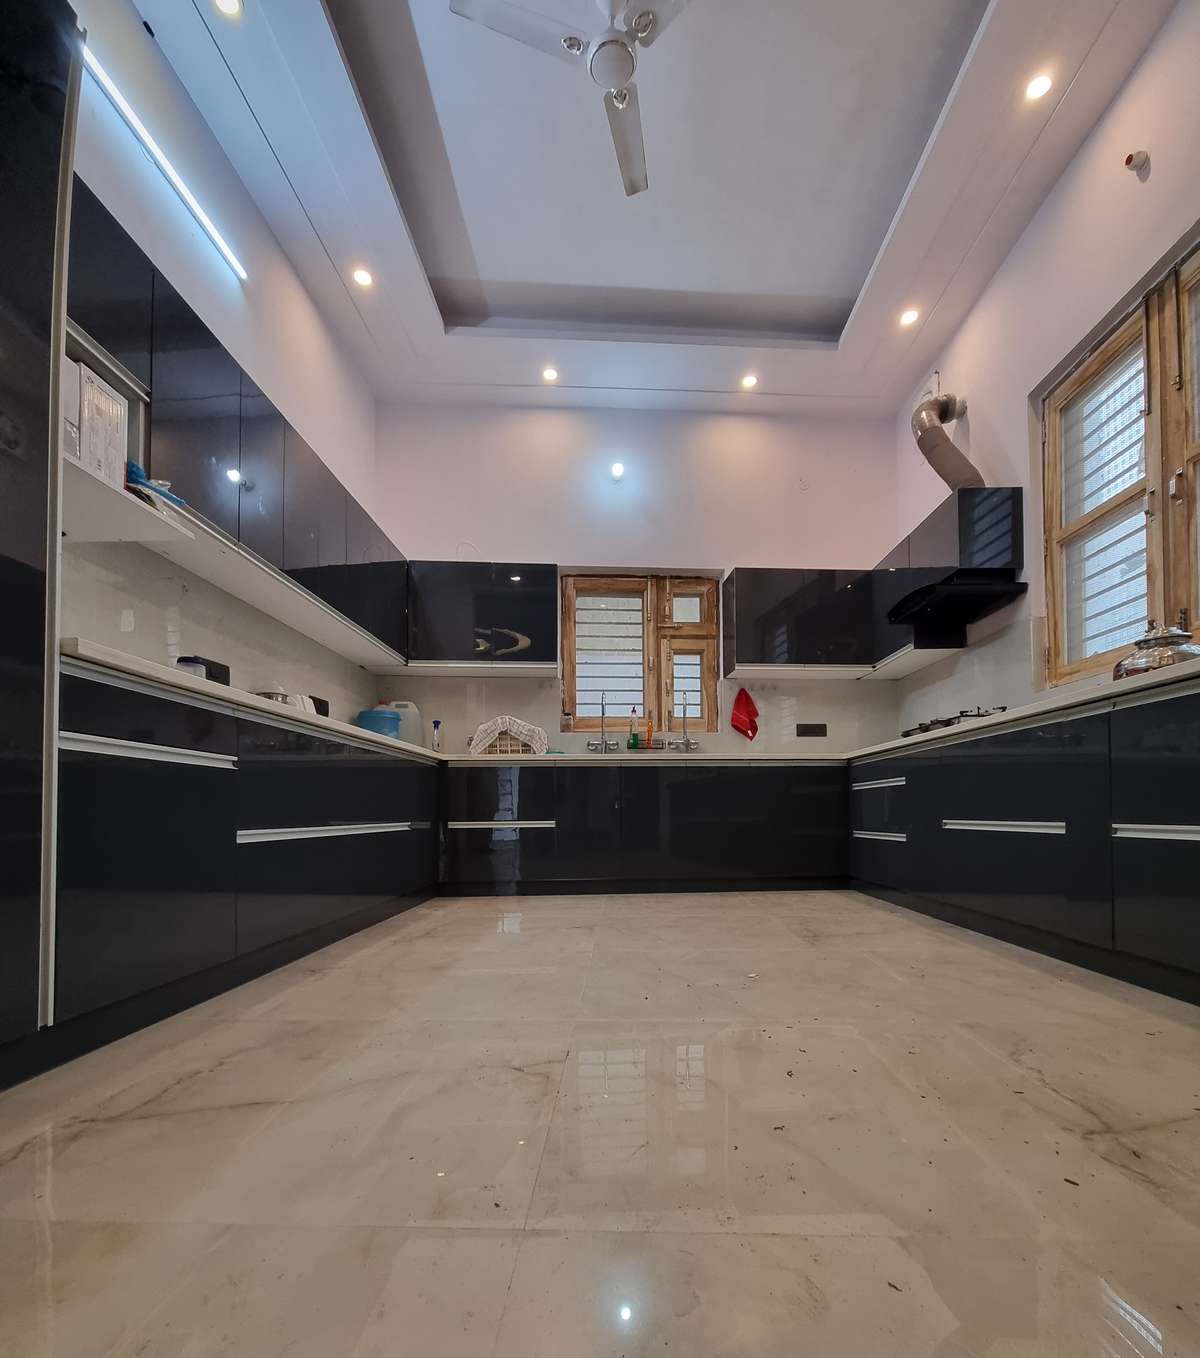 Modular kitchen by Majestic Interiors (9911692170)
#latestkitchendesign
#modular_kitchen
#kitchendesign
#ModularKitchen
#lshapedkitchen
#awesome
#beautiful
#interiordesigner
#latestkitchendesign
#ushapekitchen
#modular_kitchen_in_faridabad
#interiordesignerinfaridabad
#faridabad
#majesticinteriors
#HIGHGLOSSKITCHEN
WWW.MAJESTICINTERIORS.CO.IN
9911692170